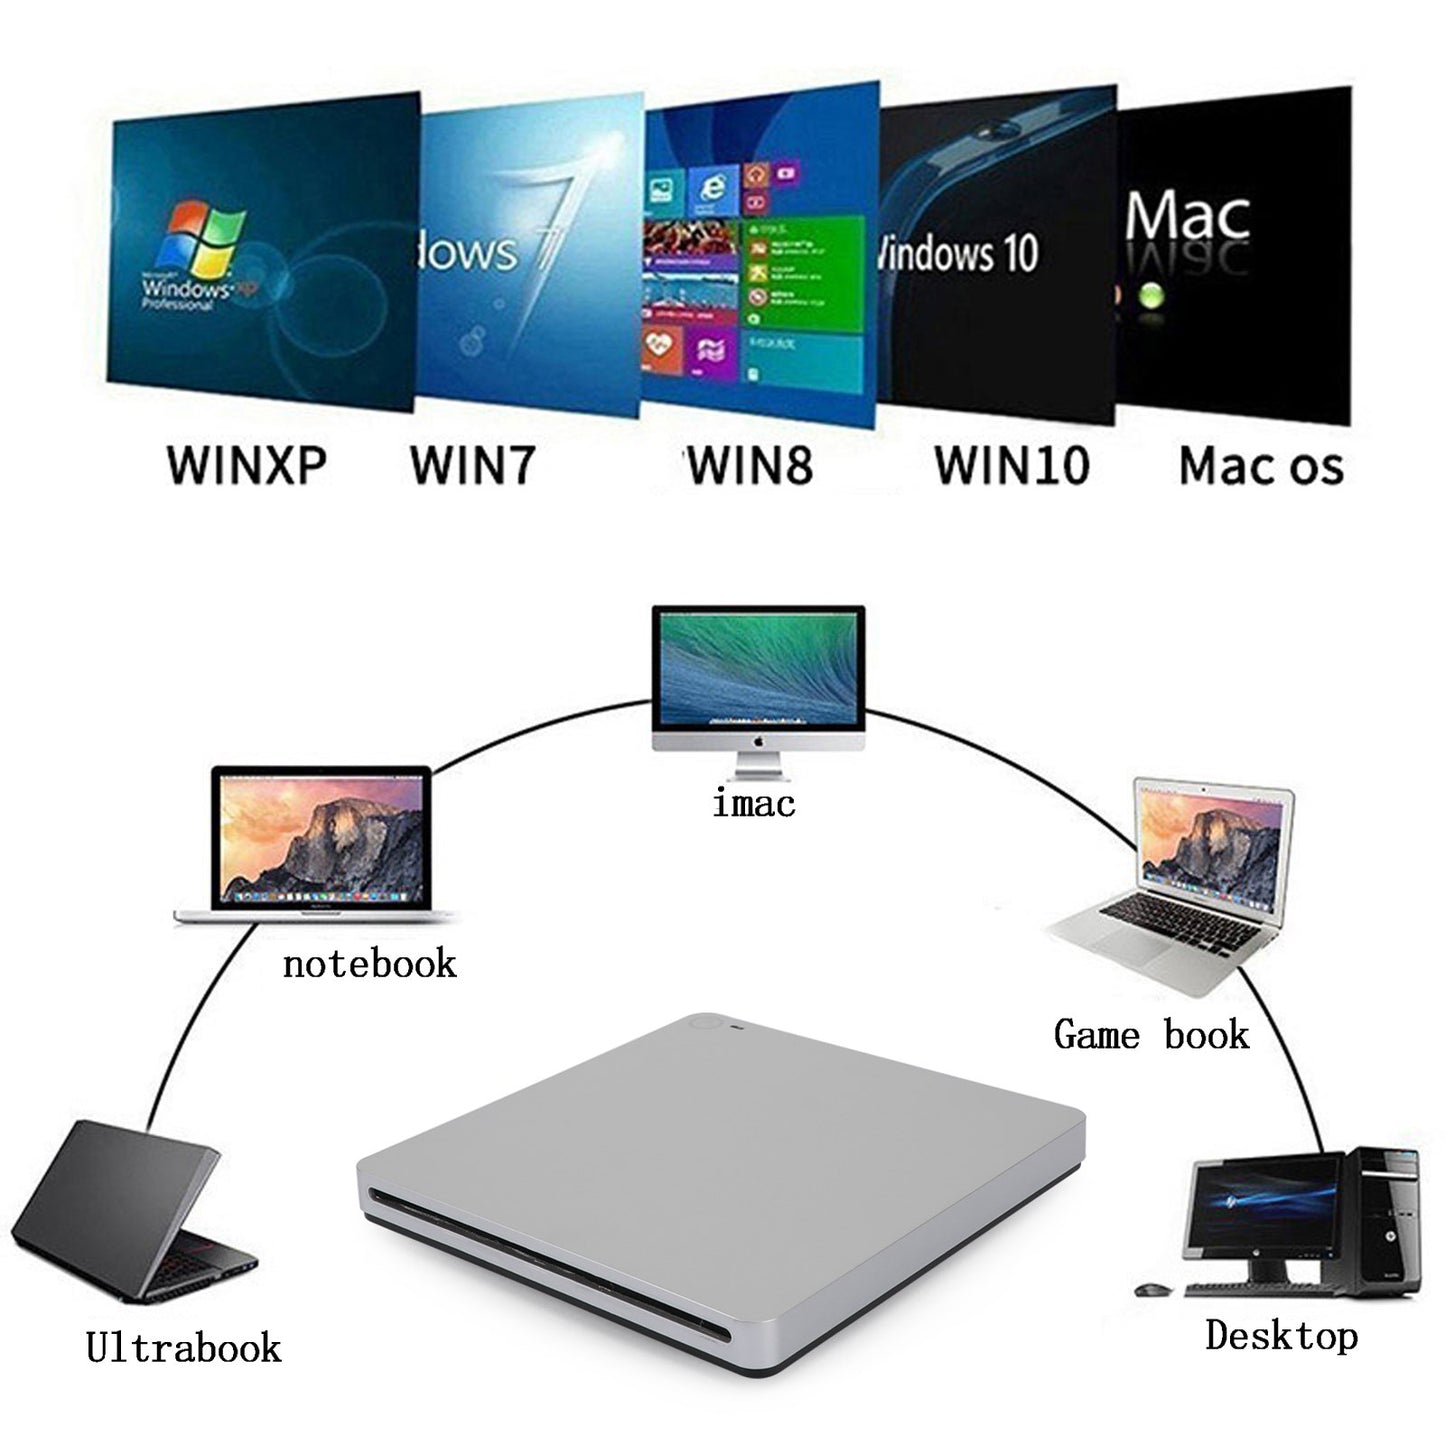 Slot-in External Drive USB 3.0 Type-C Player Writer für Laptop PC Mac